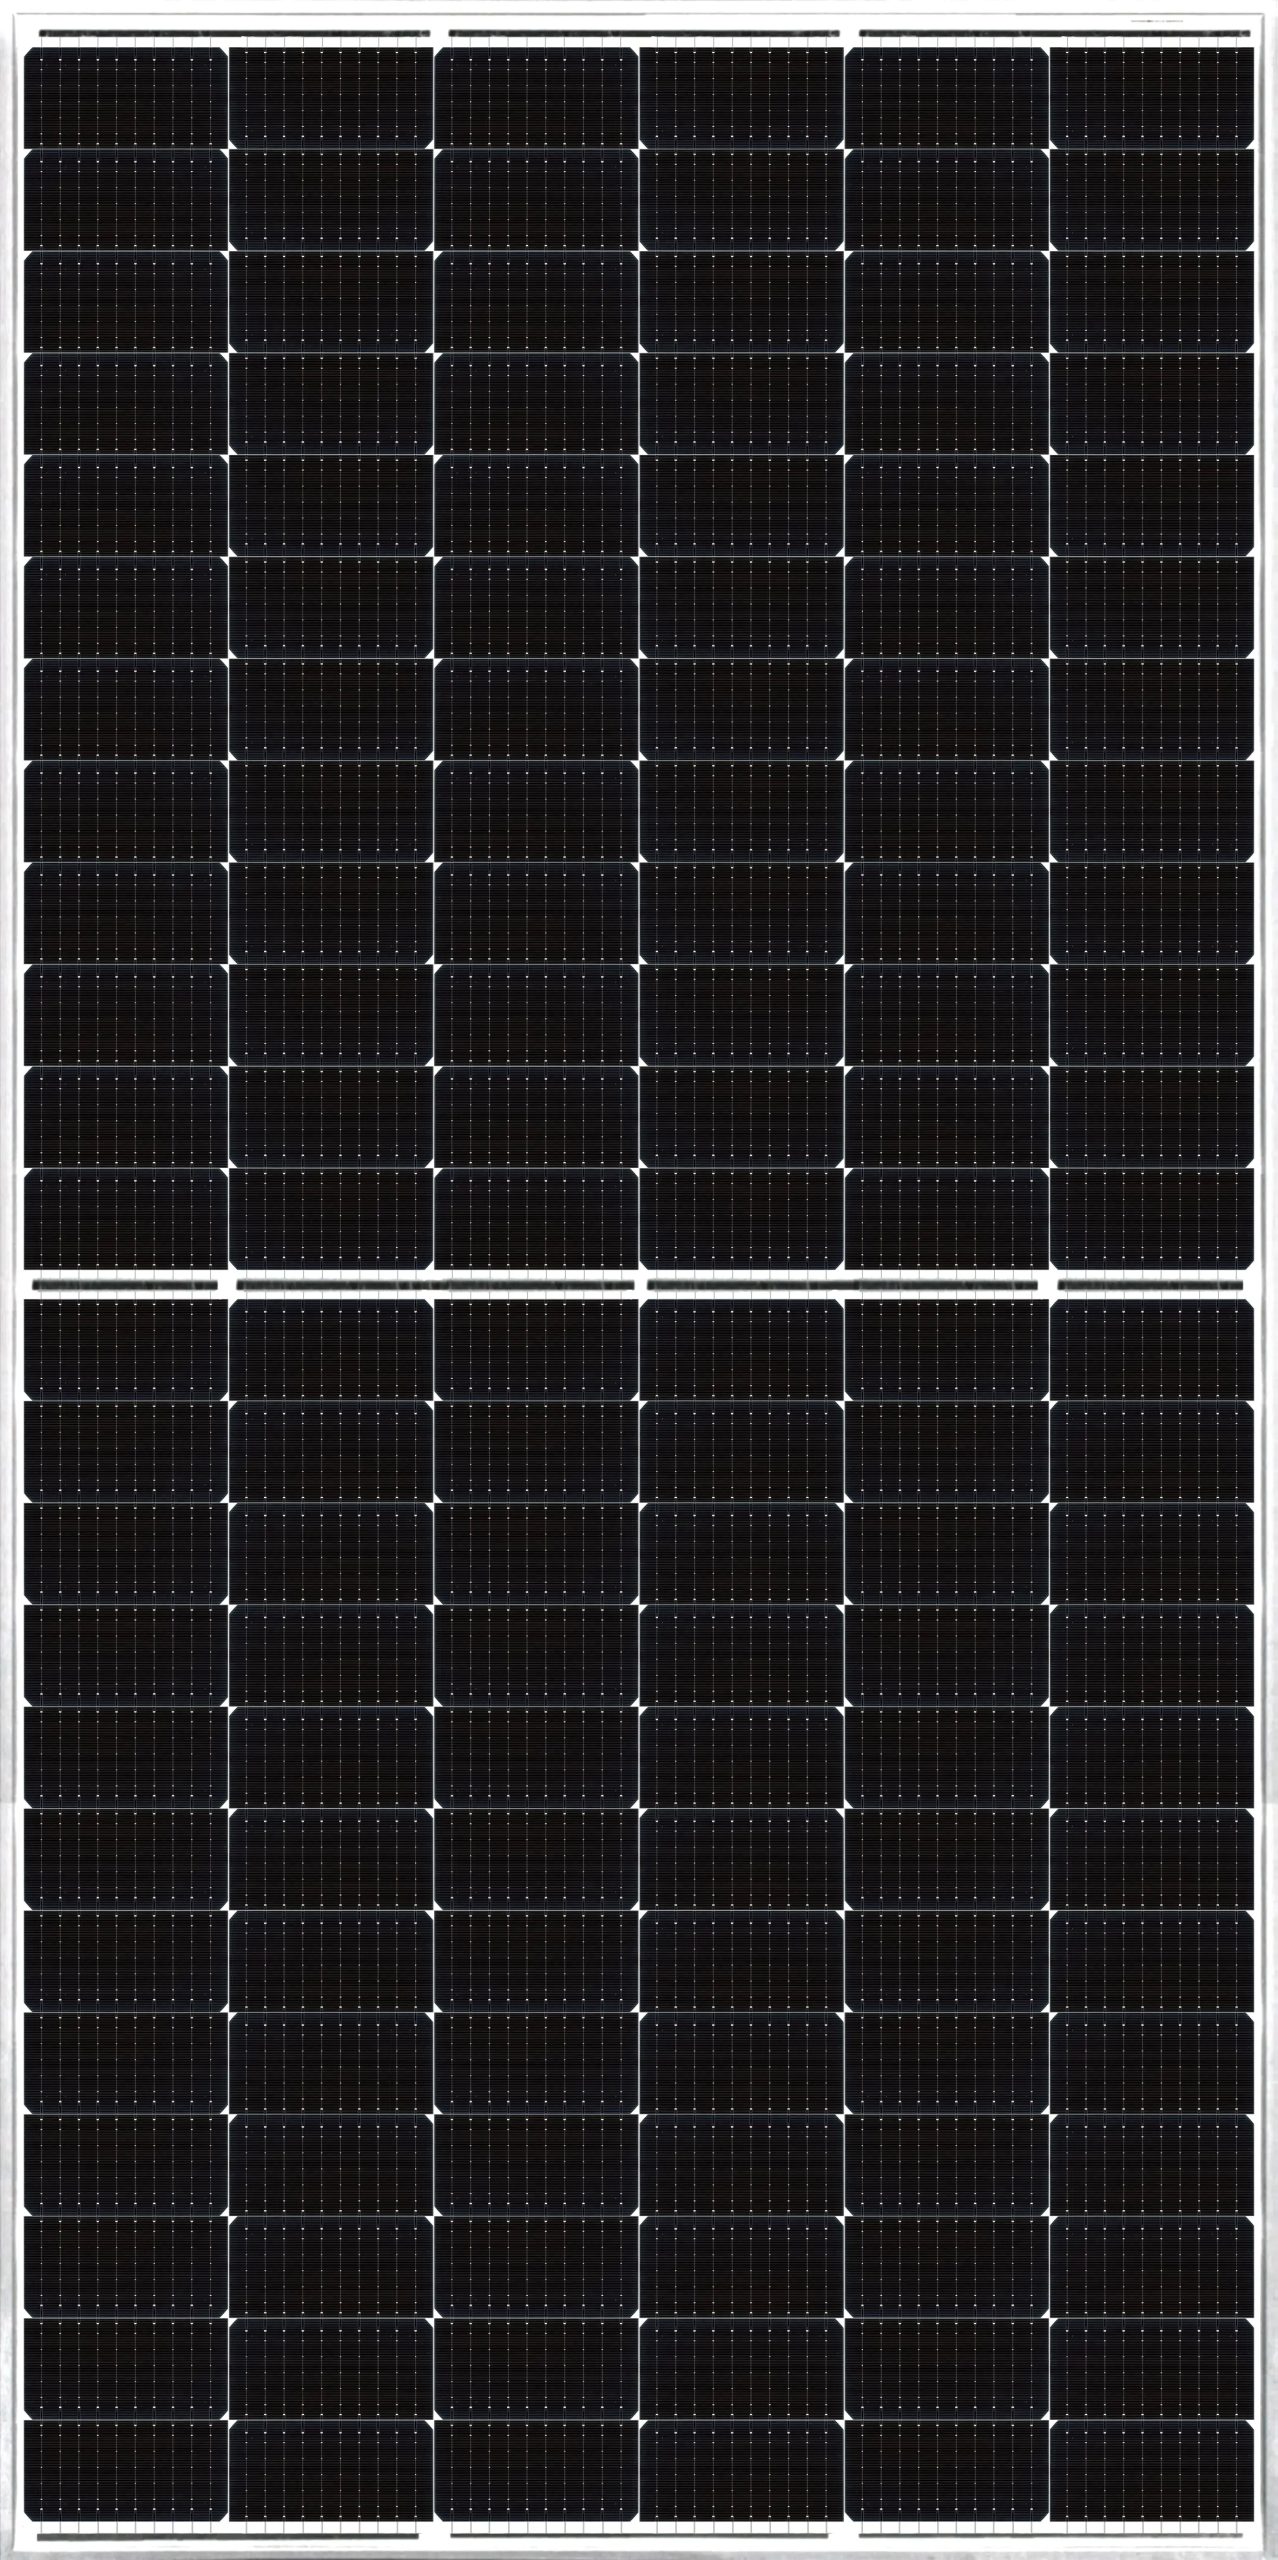 CANADIAN SOLAR HIKU6 LARGE 540W MONO SILBERRAHMEN 35MM Solarmodul